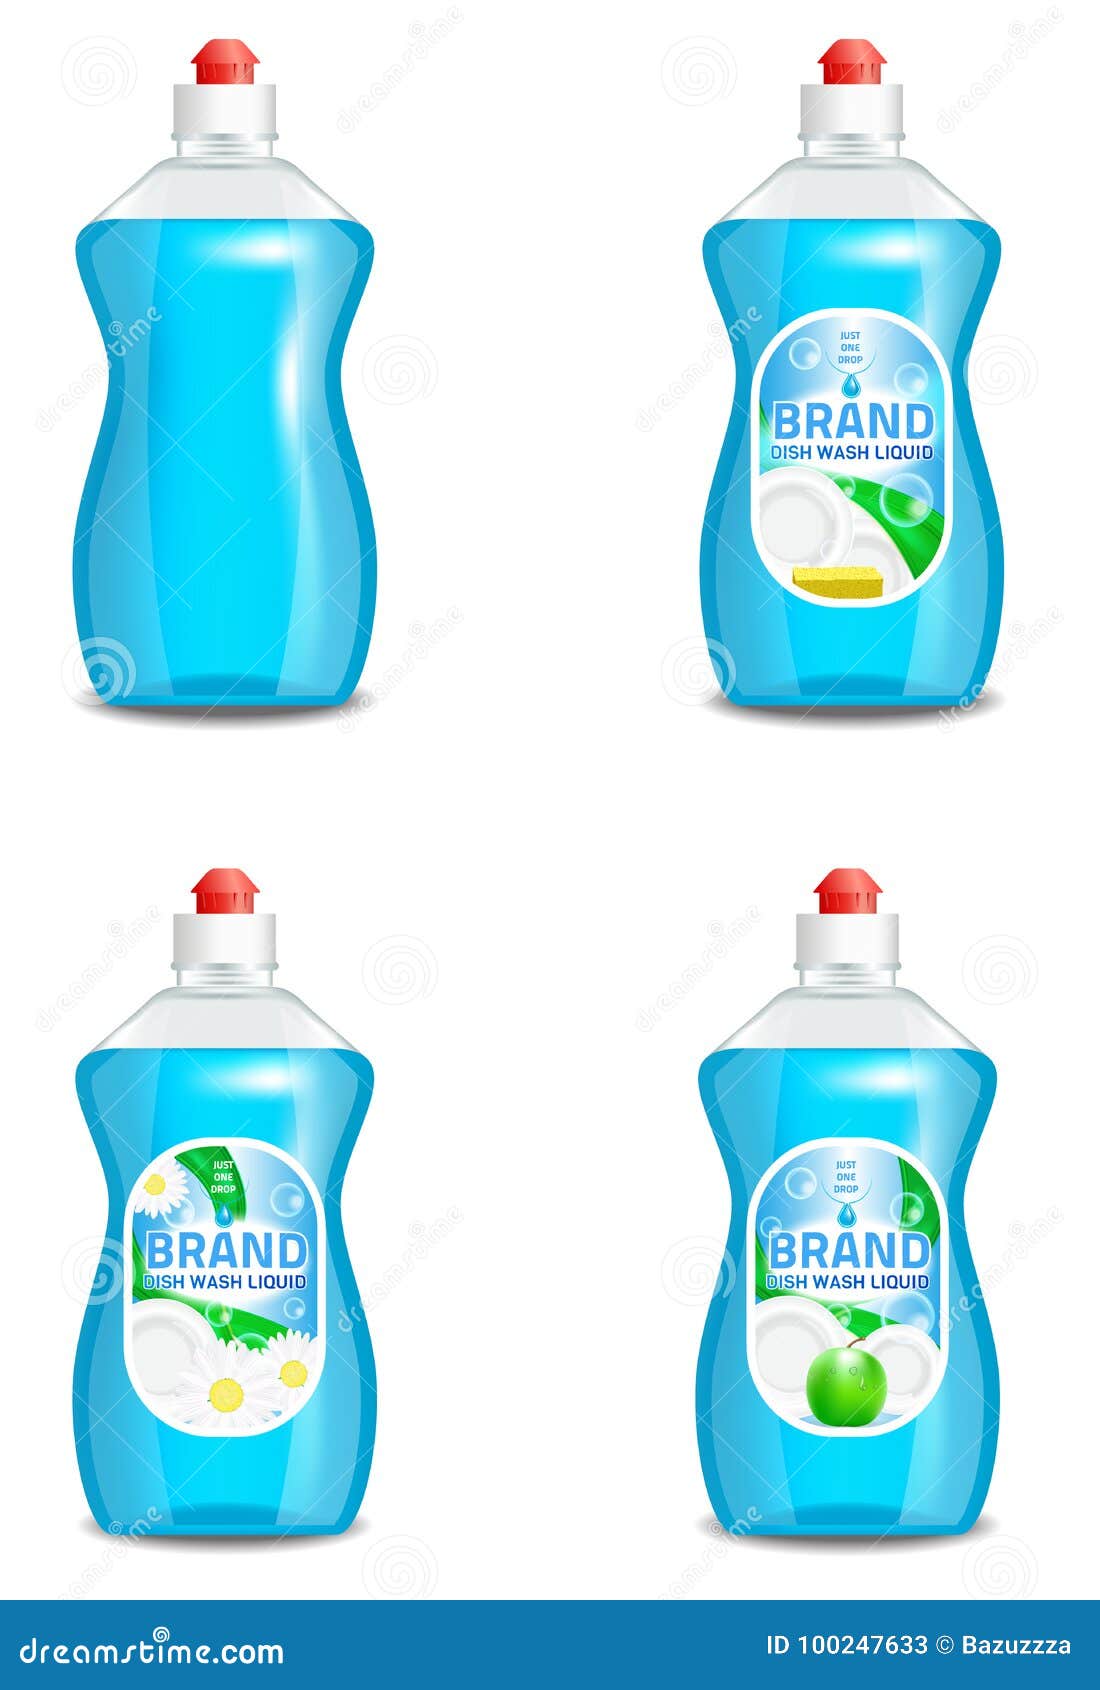 Vector Set Of Realistic Dishwashing Liquid Product Icons, 43% OFF